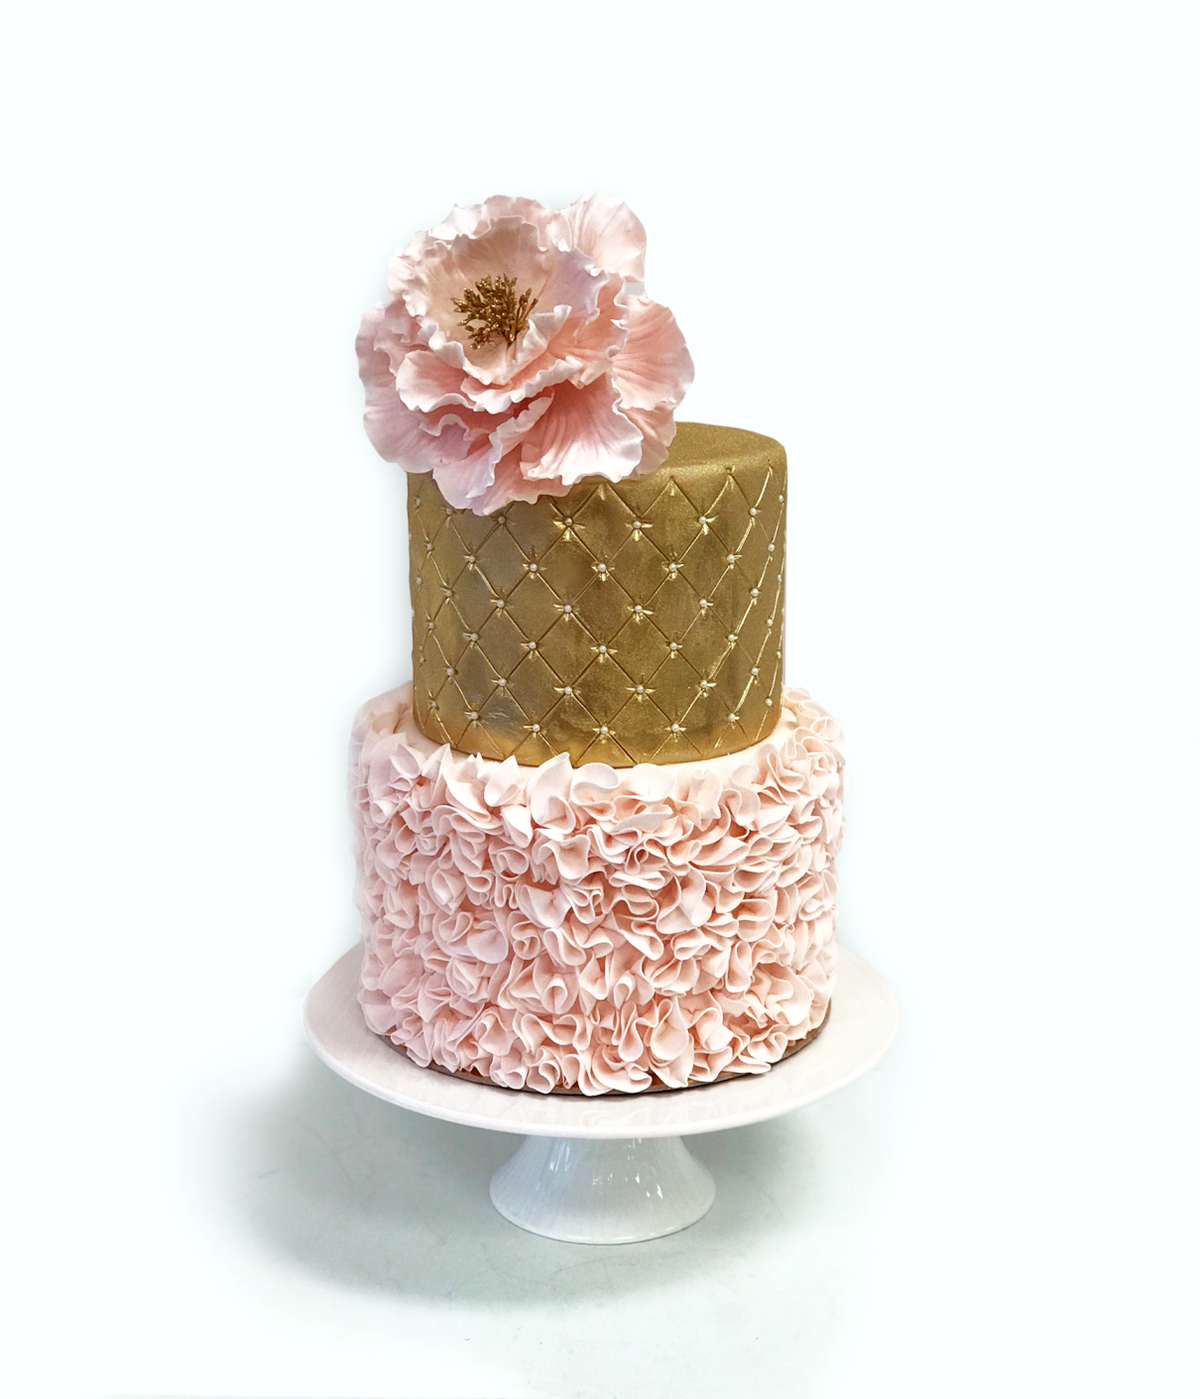 Whippt Desserts - wedding cake Sept 2018 - Rocky Mountain Show Jumping